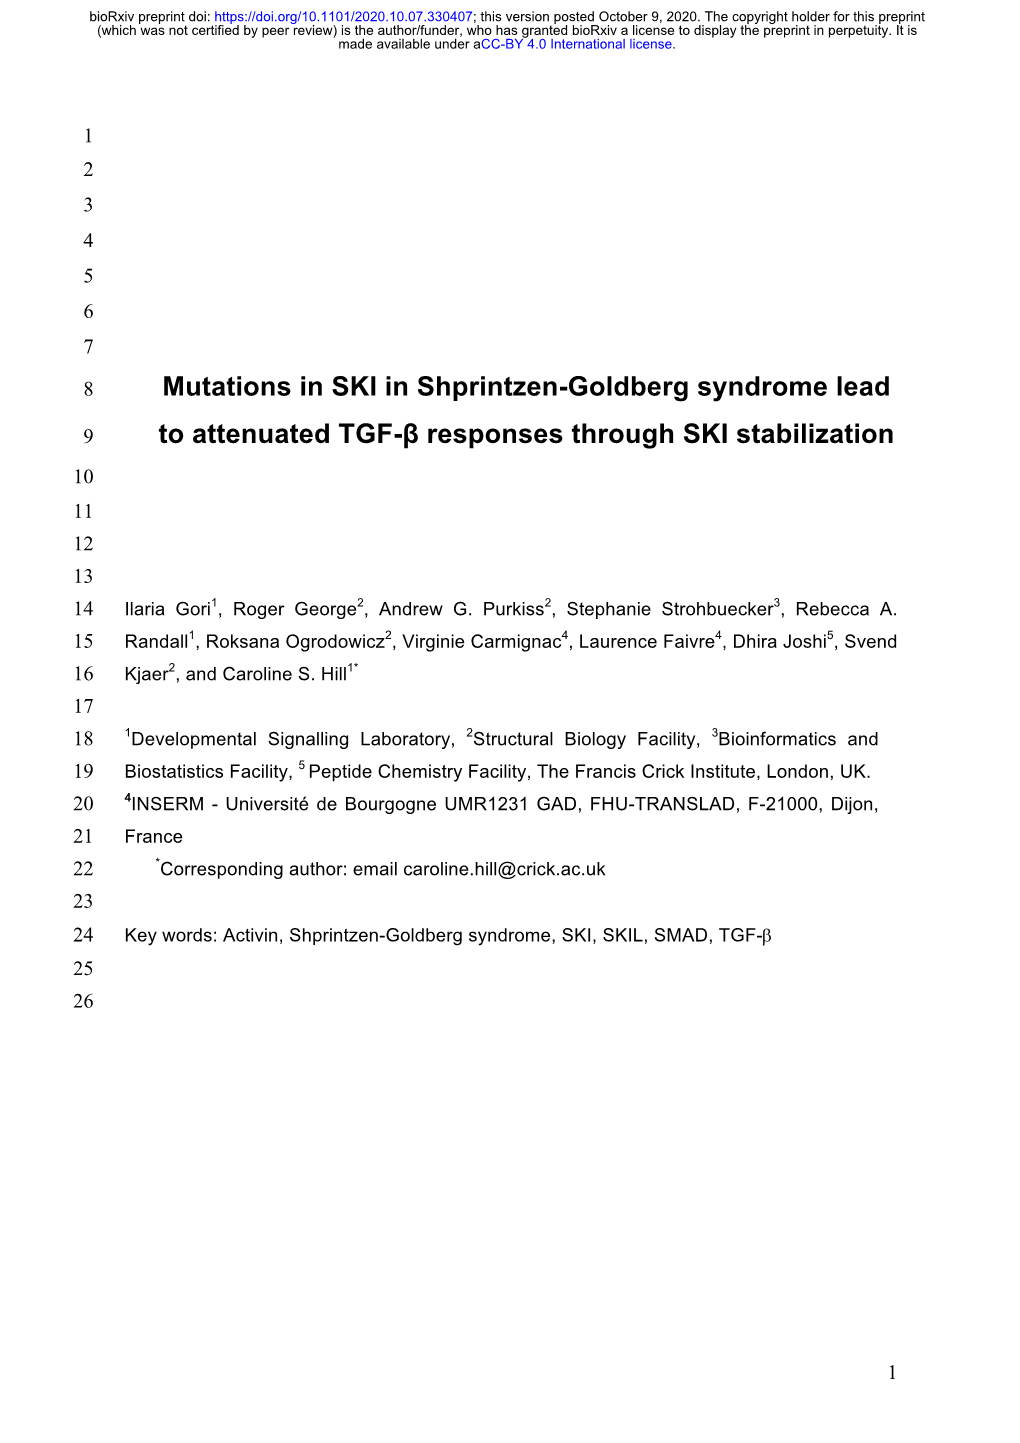 Mutations in SKI in Shprintzen-Goldberg Syndrome Lead